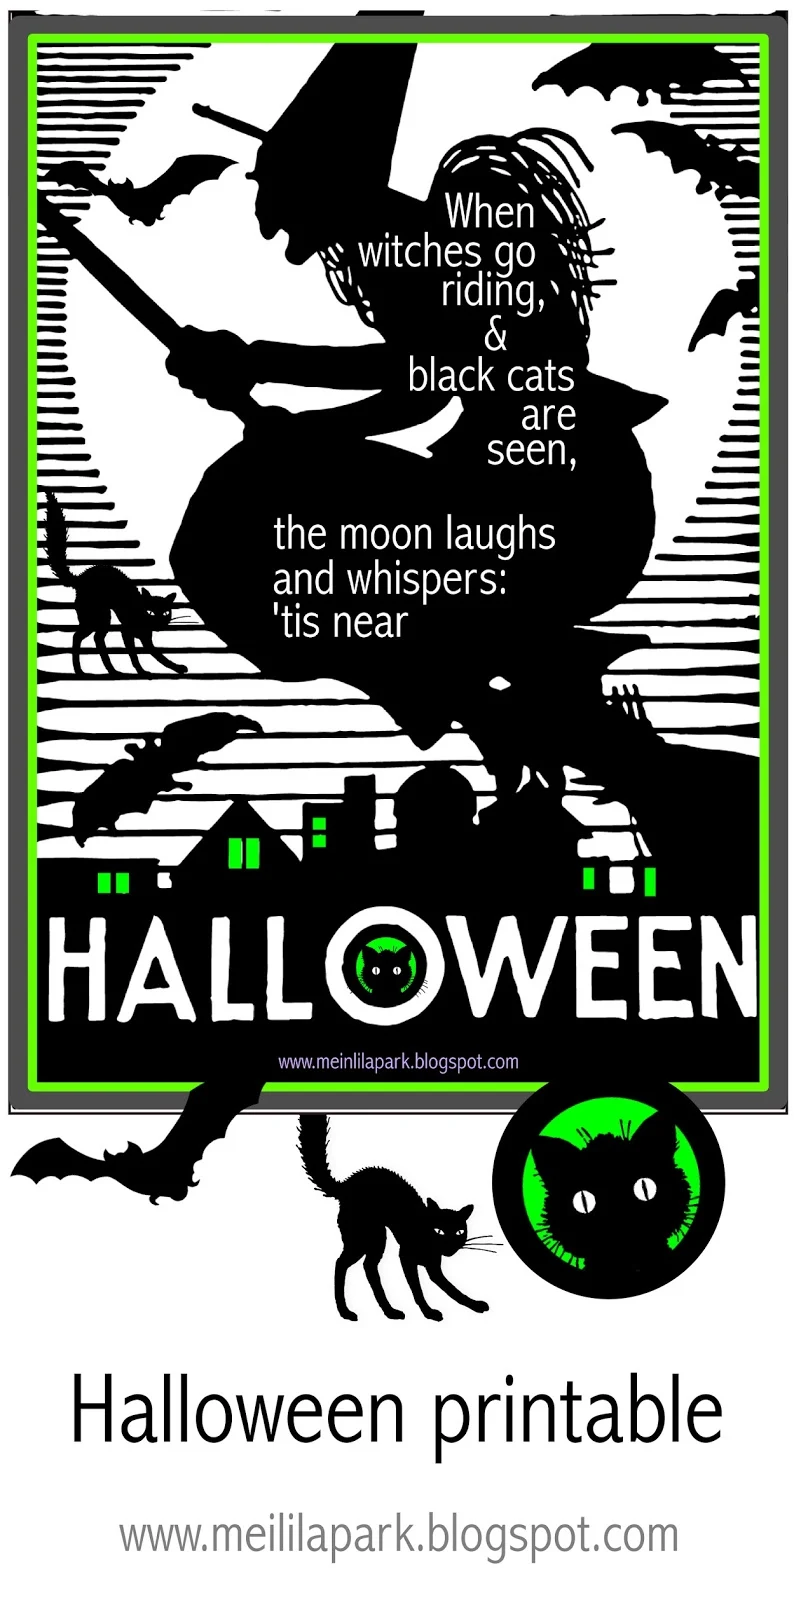 Free printable Halloween quote print ausdruckbares Halloweenposter